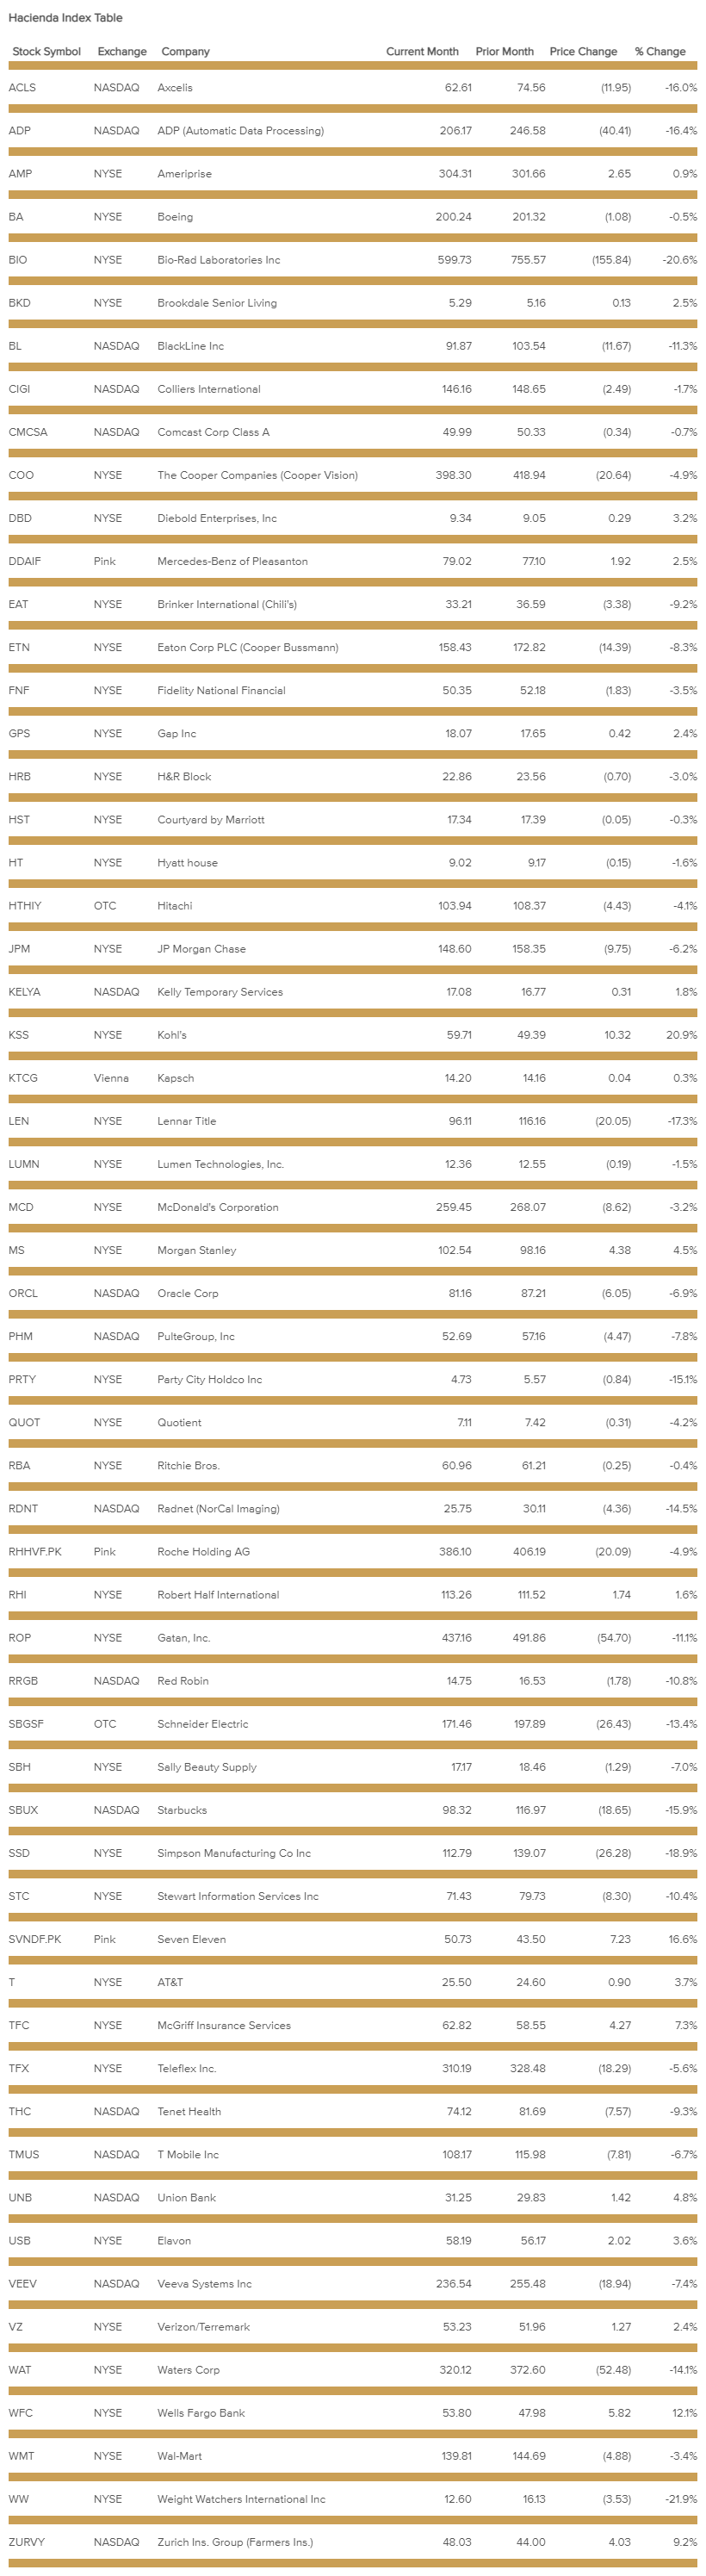 hacienda-index-table-february-2022.png